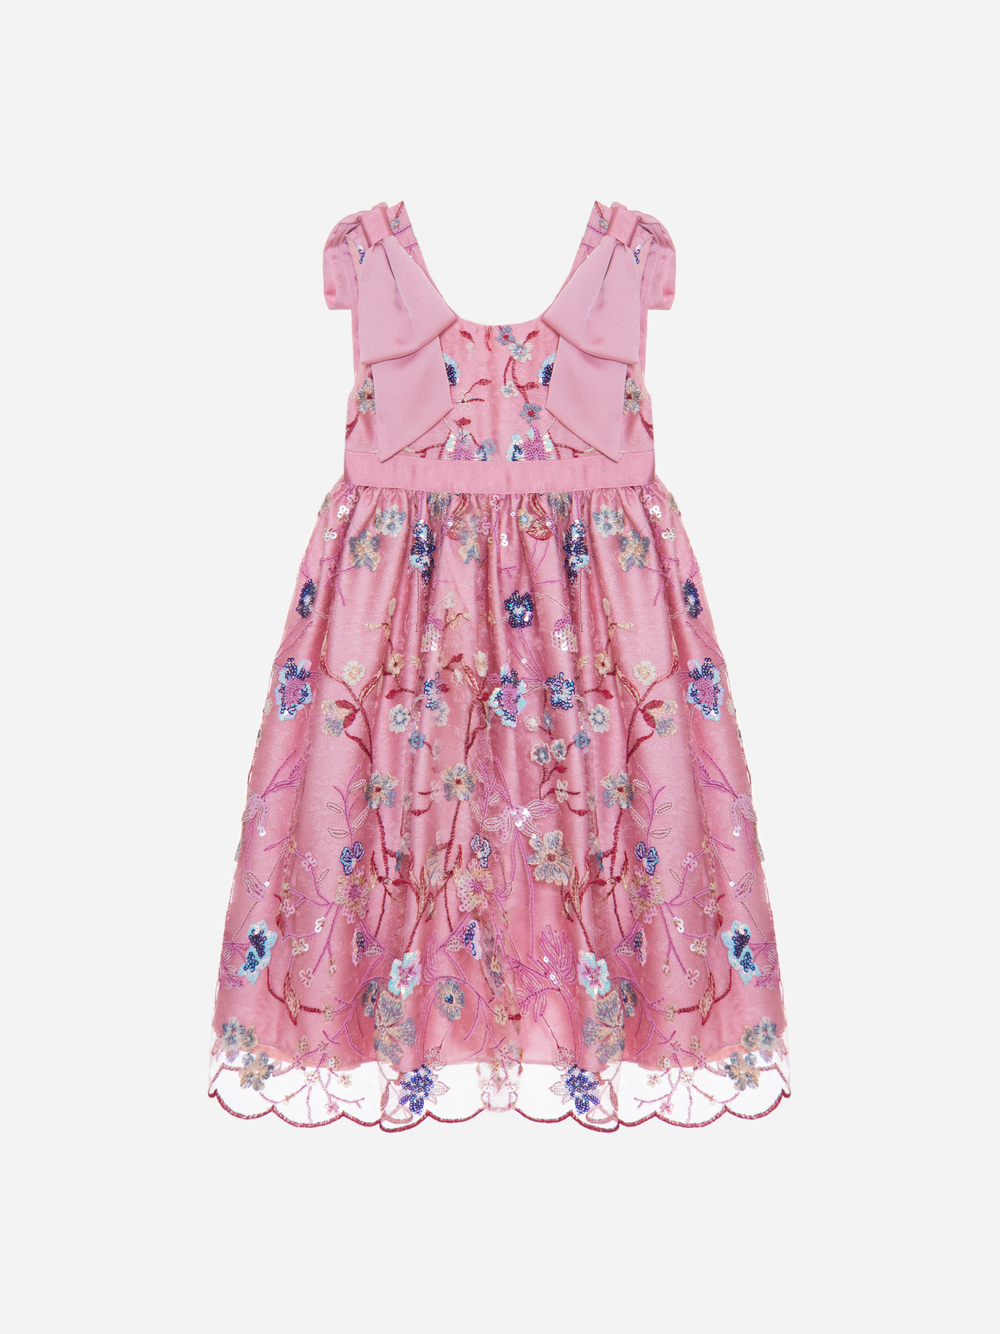 Girls pink dress with garden print